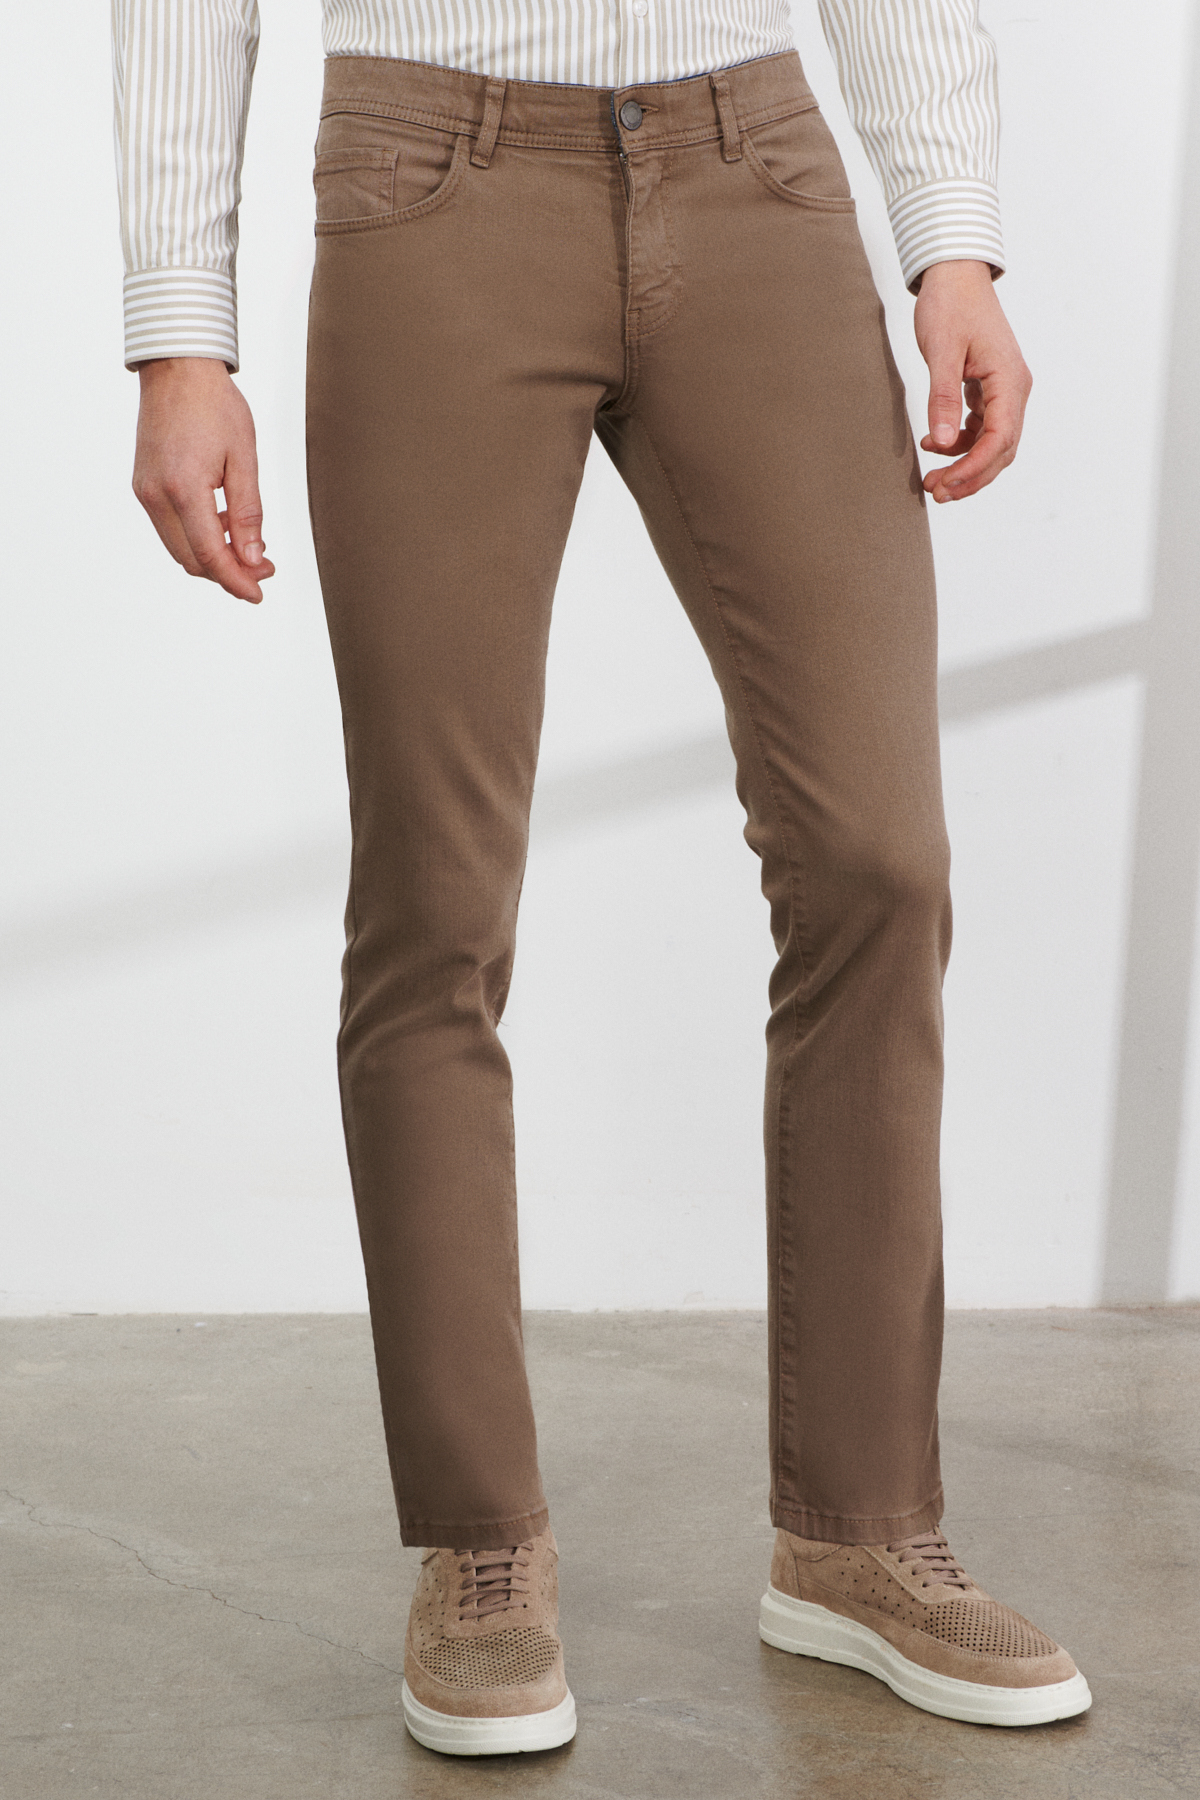 ALTINYILDIZ CLASSICS Men's Mink Casual Slim Fit Slim-fit Pants that Stretch 360 Degrees in All Directions.